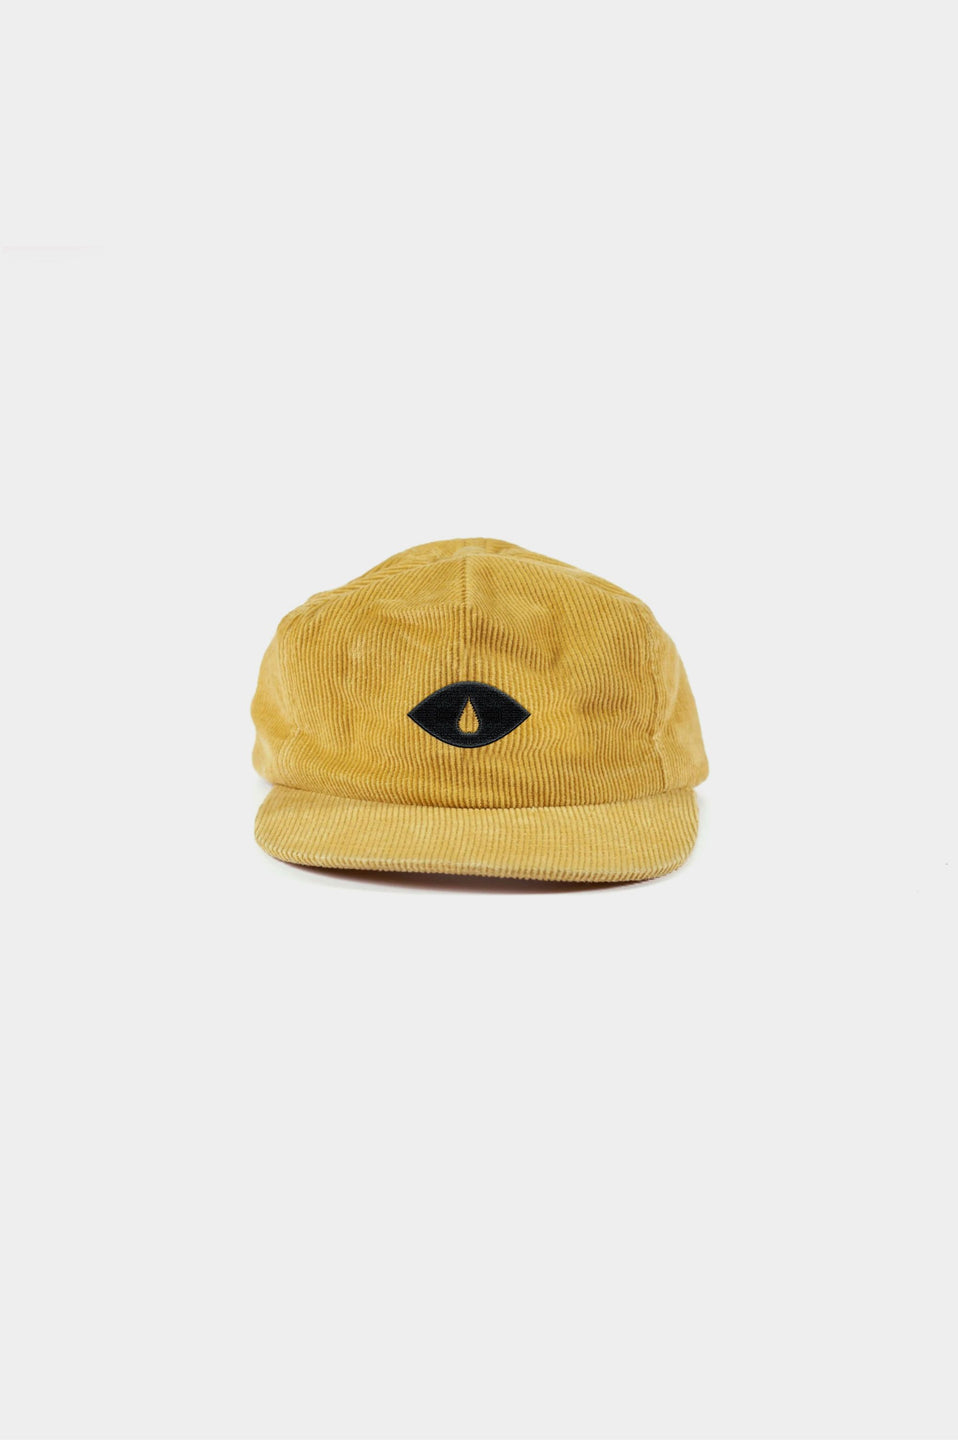 Apparel - Cord Eye Cap - Mustard